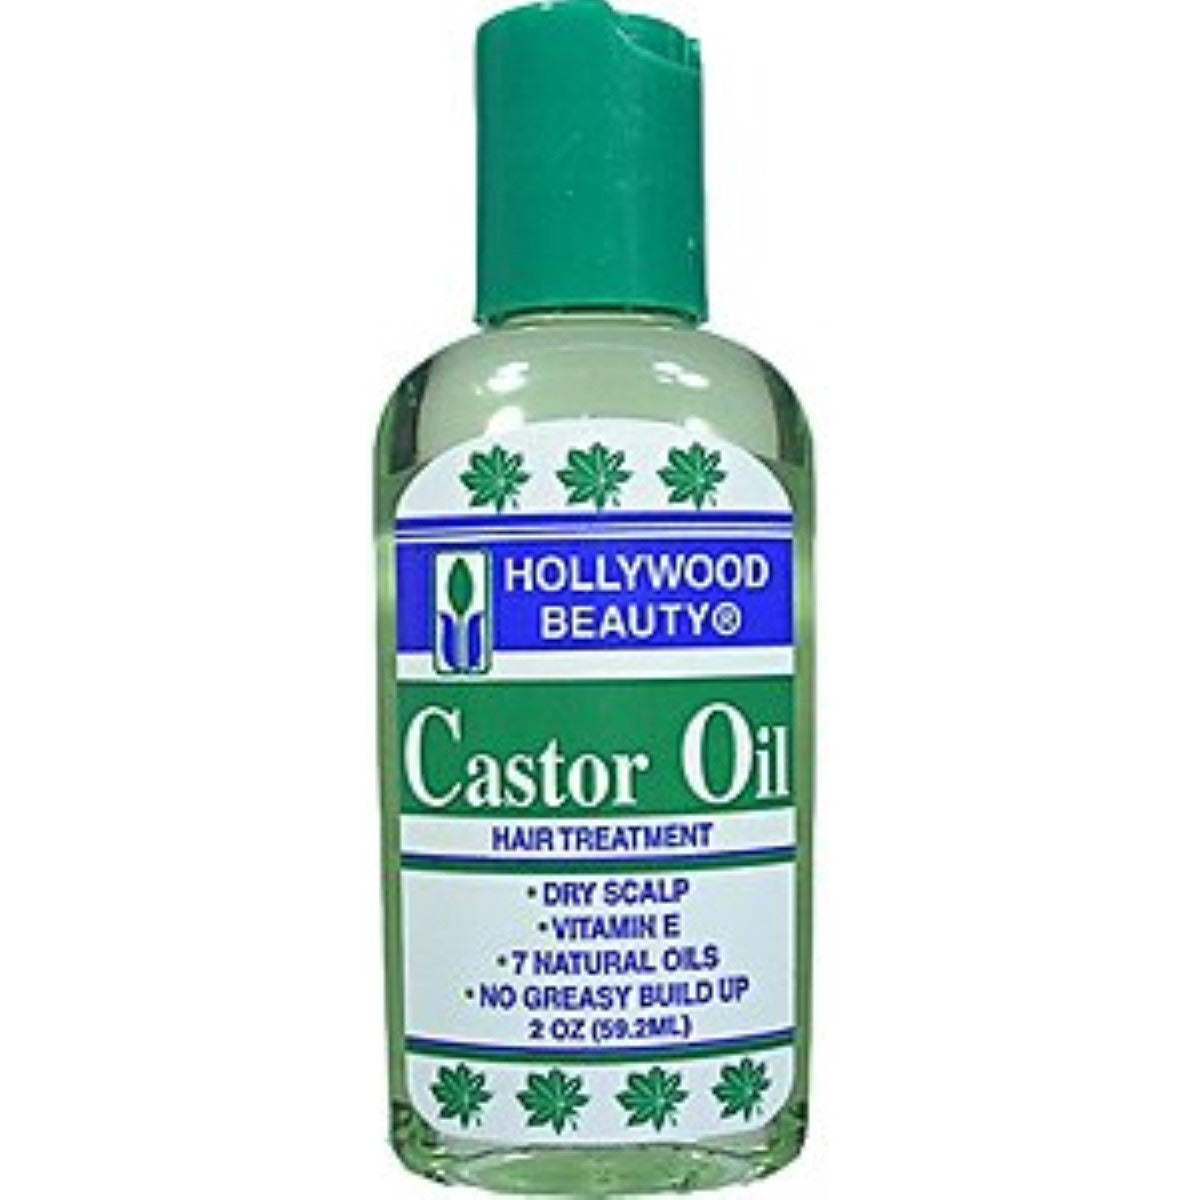 4th Ave Market: Hollywood Beauty Castor Oil